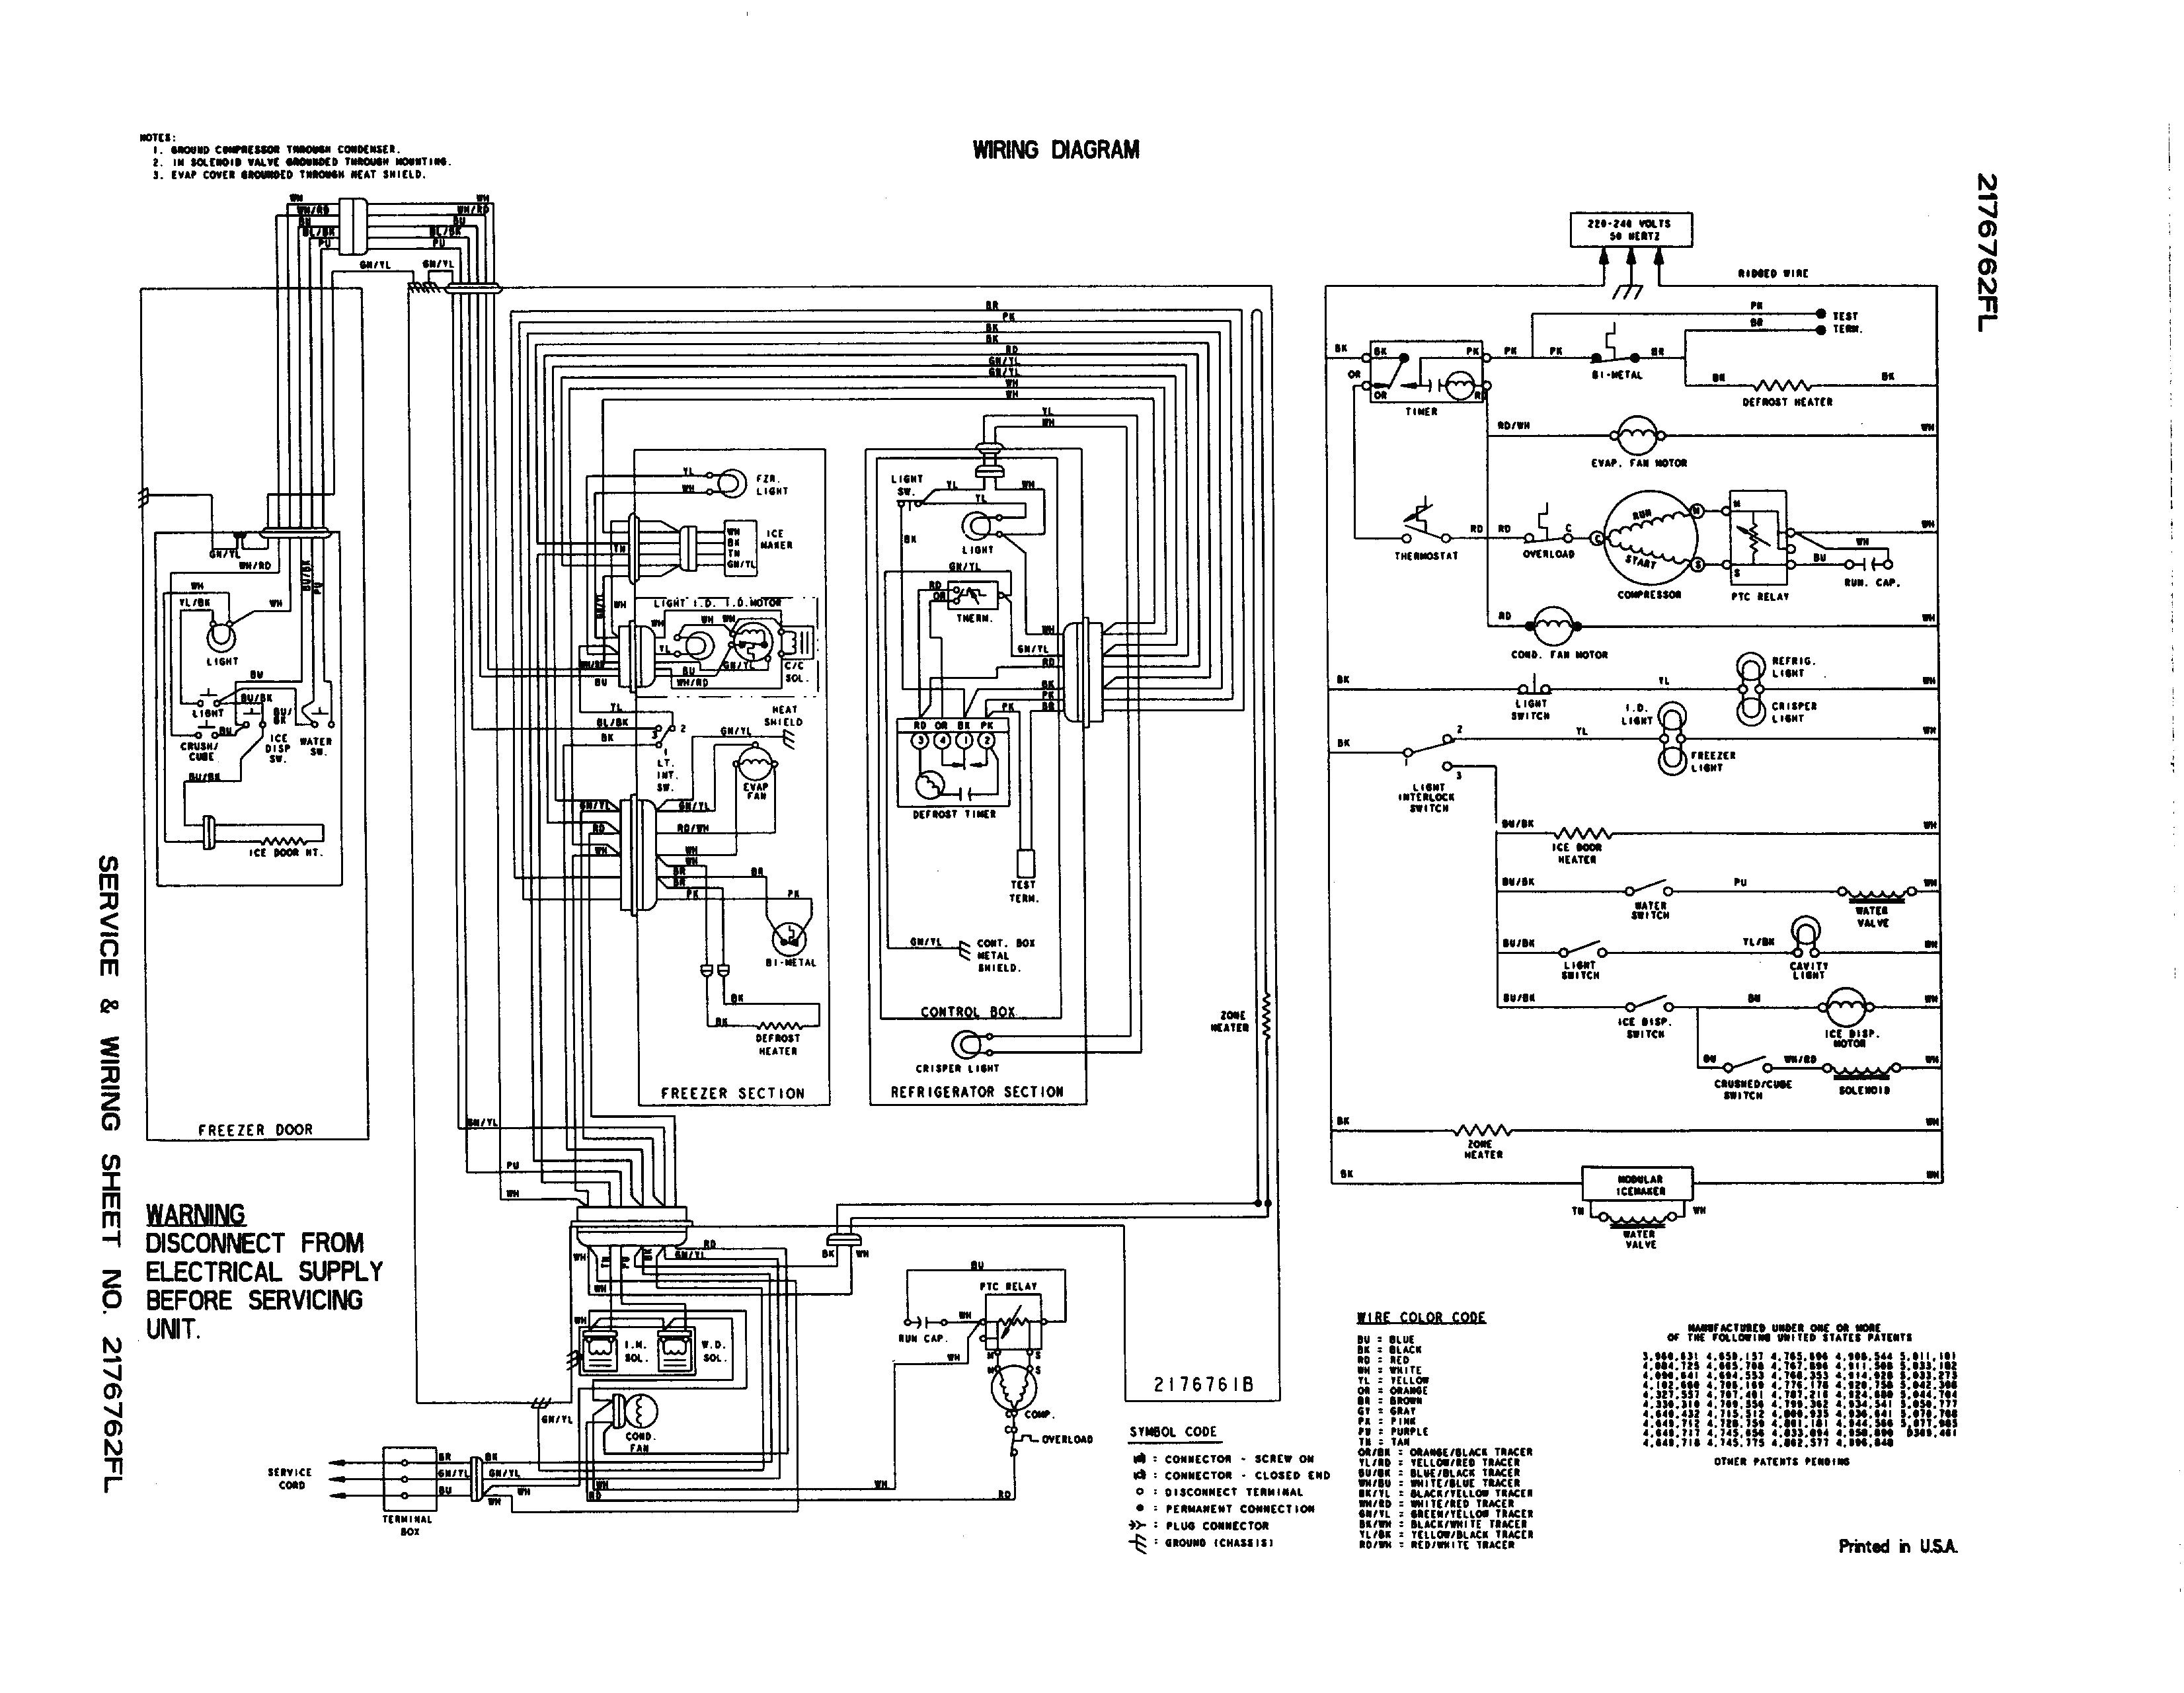 frigidaire ice maker wiring diagram ge refrigerator wiring diagram ice maker fresh whirlpool refrigerator wiring diagram electrical schematic for 2l jpg